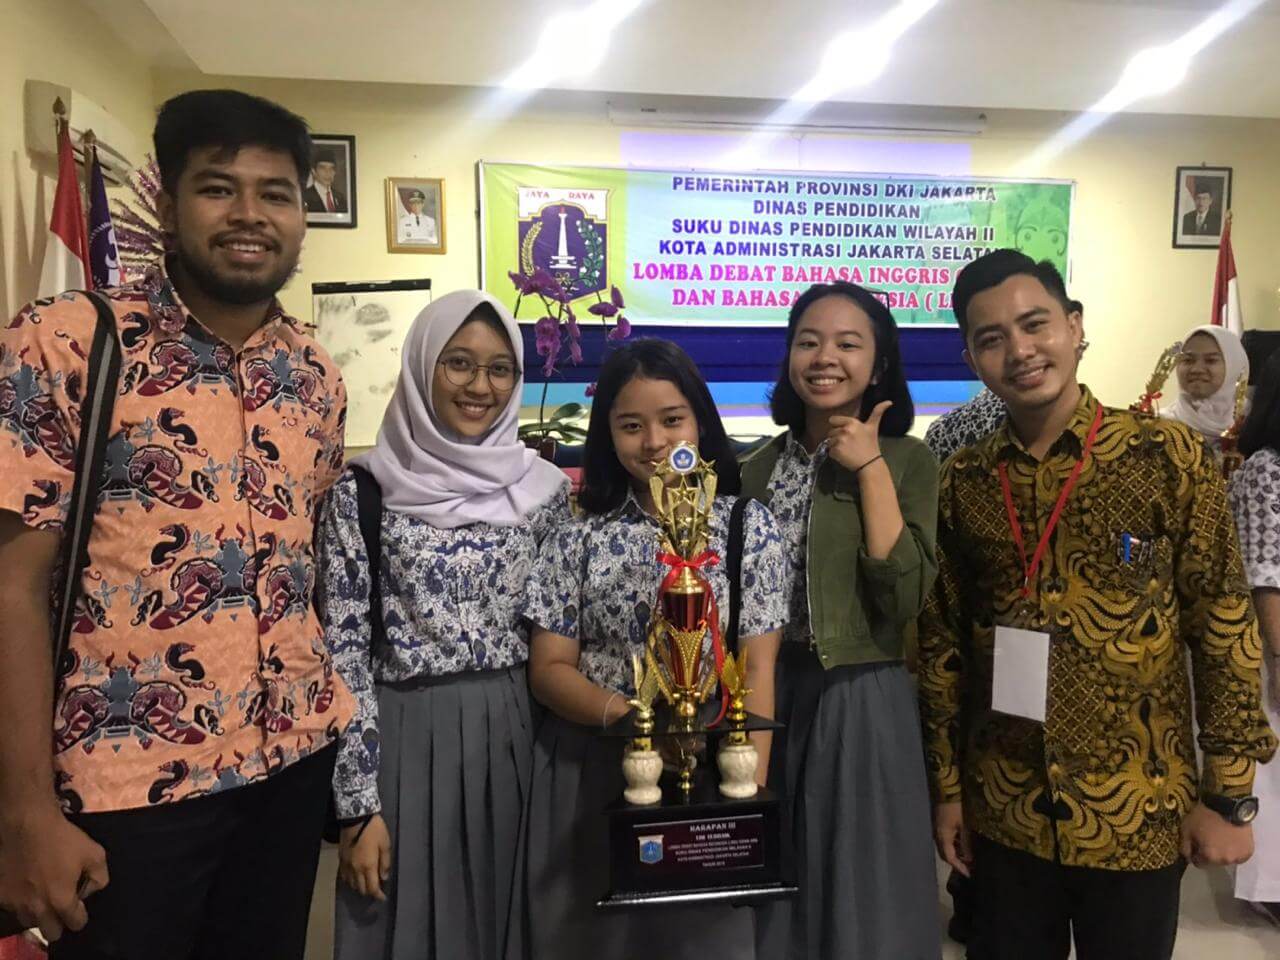 Siswi Sma Sumbangsih Sebagai satu-satunya sekolah swasta yg melaju ke final Lomba Debat Bahasa